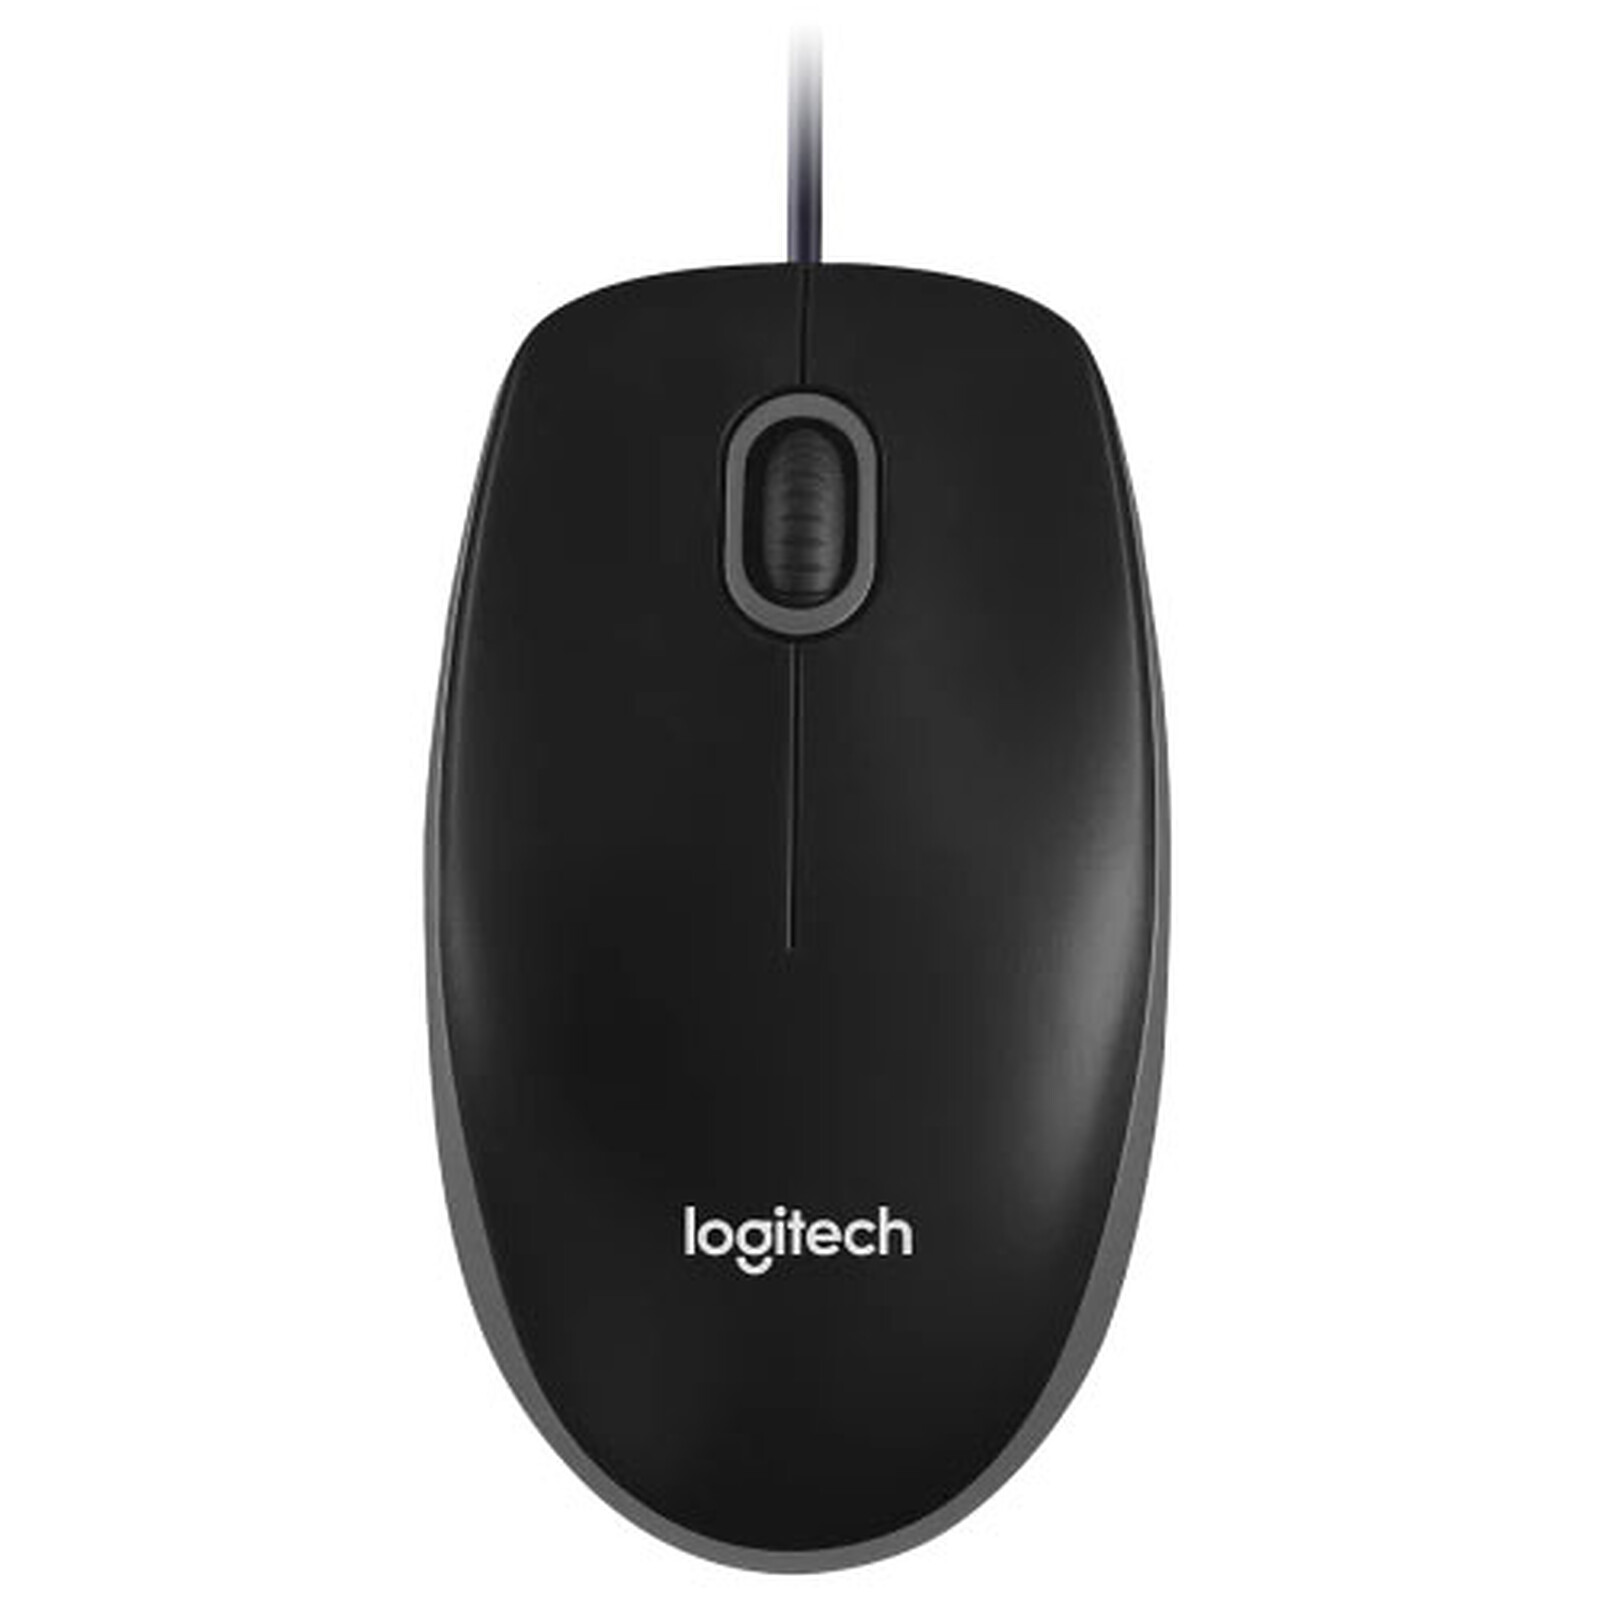 Logitech B100 Optical USB Mouse (Nero) - Mouse - Garanzia 3 anni LDLC